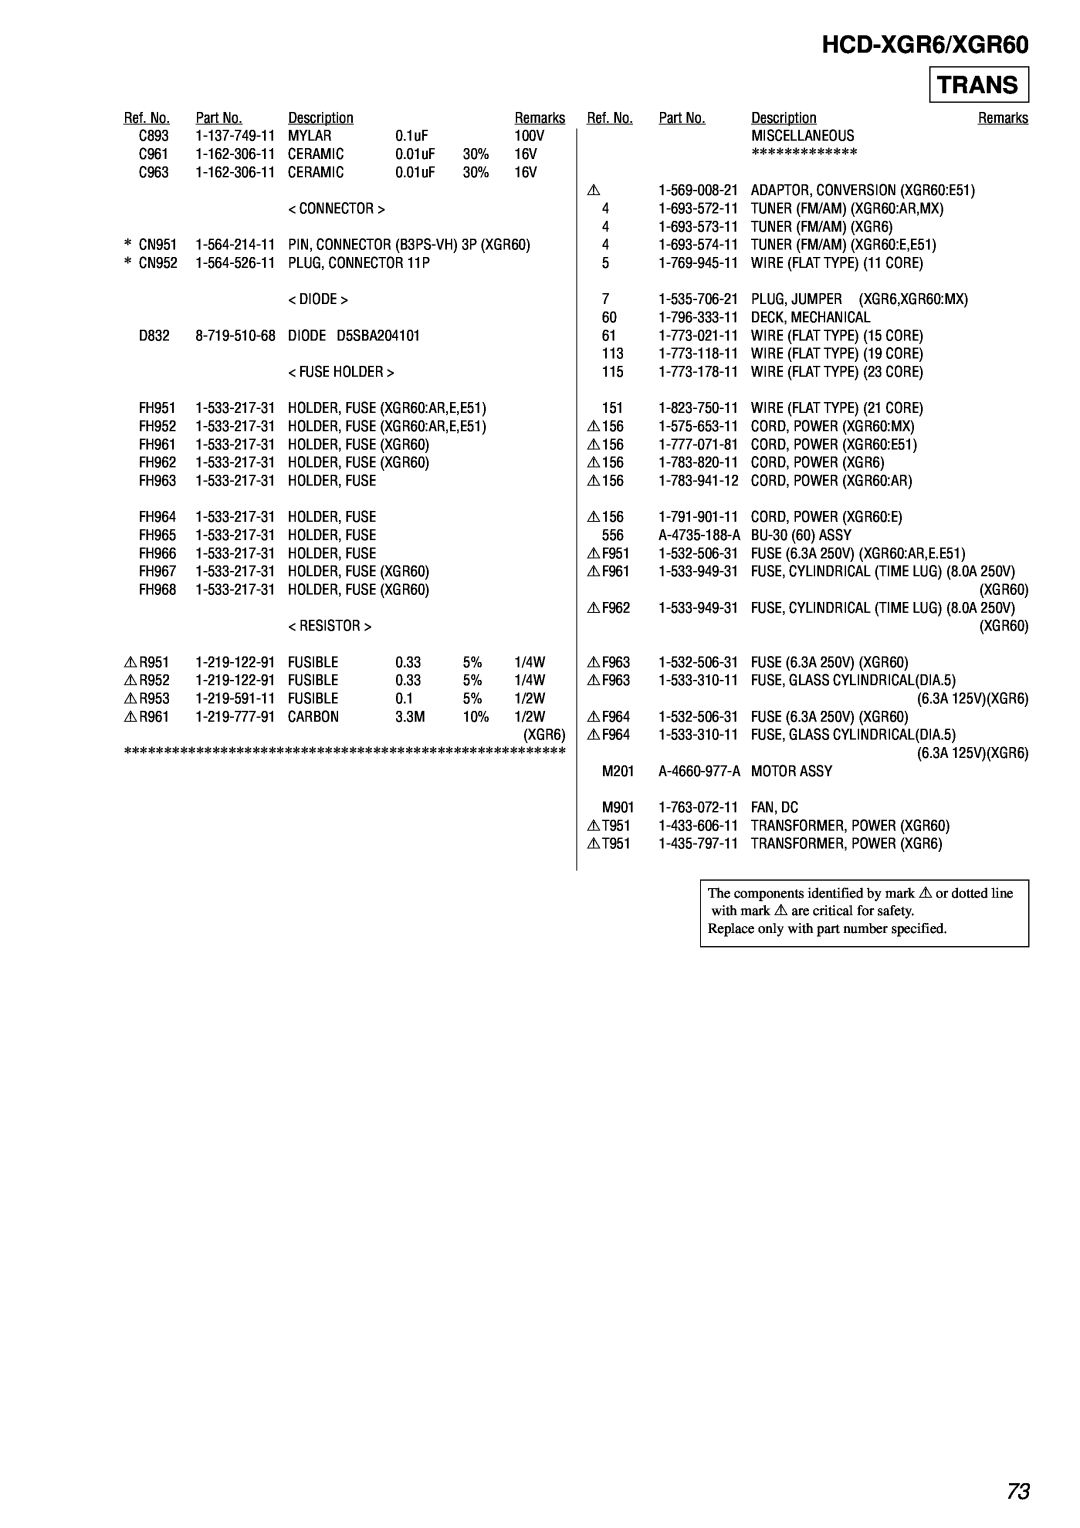 Sony HCD-XGR60 specifications HCD-XGR6/XGR60, Trans, Ref. No. Part No. Description, Remarks 